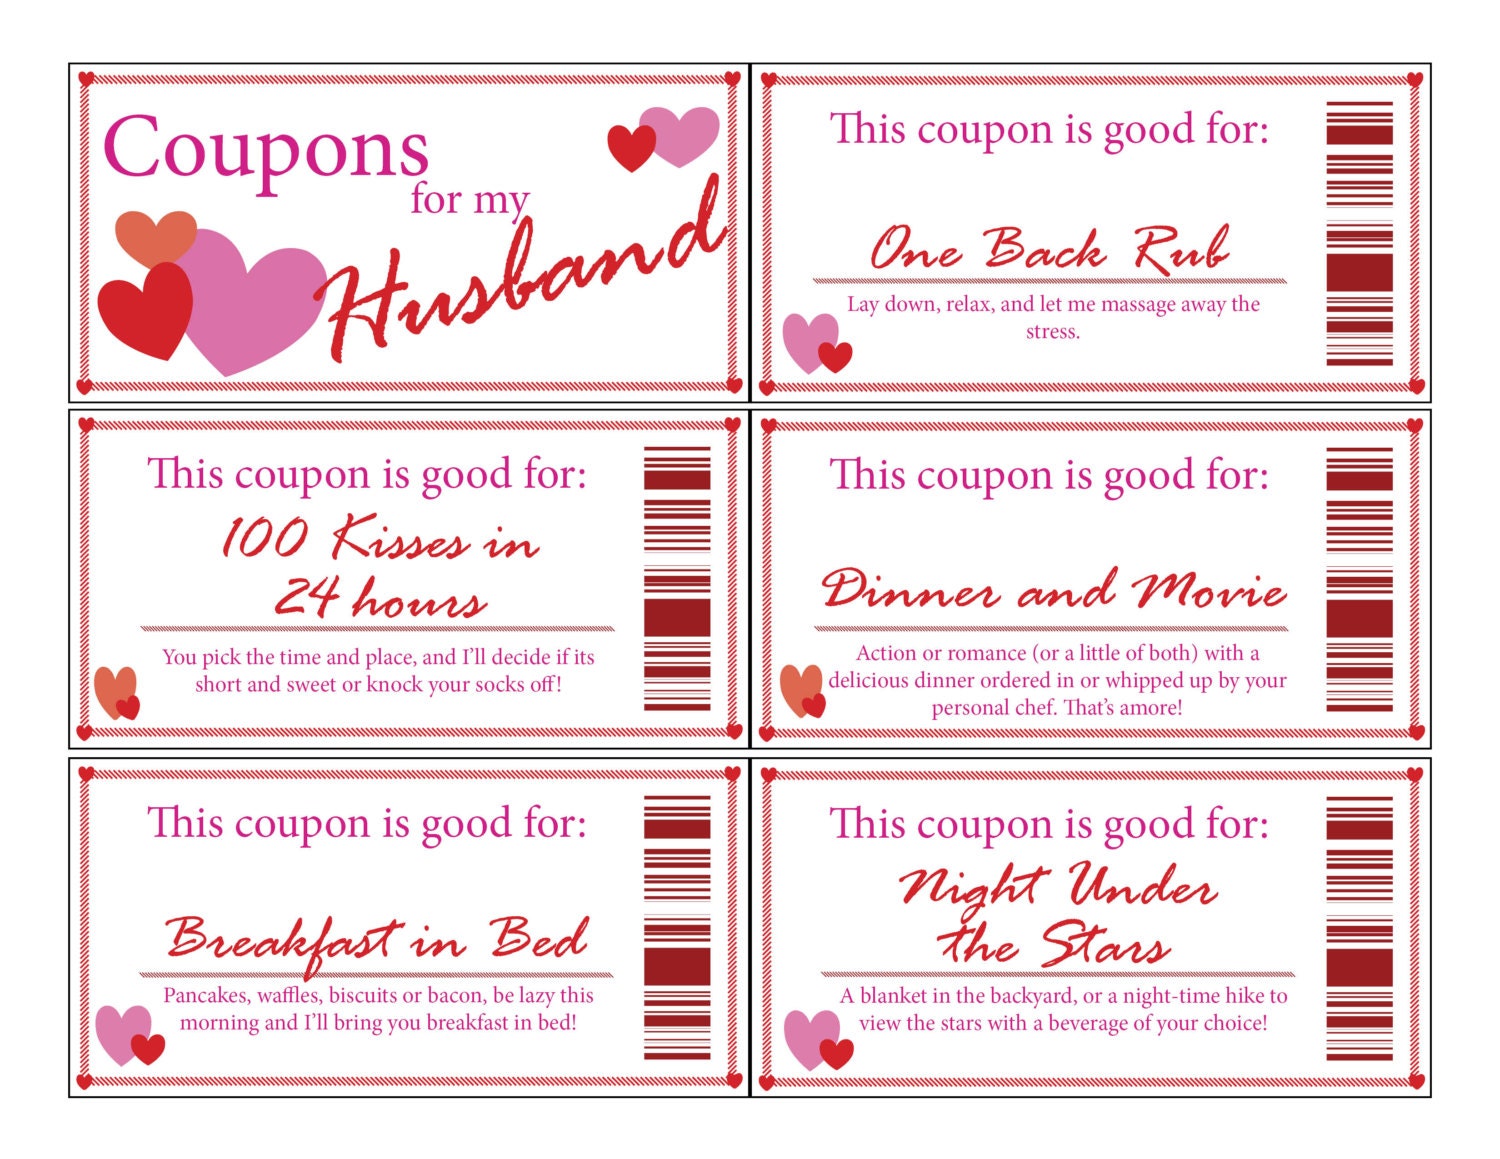 husband-love-couponsprintabledigitalstocking